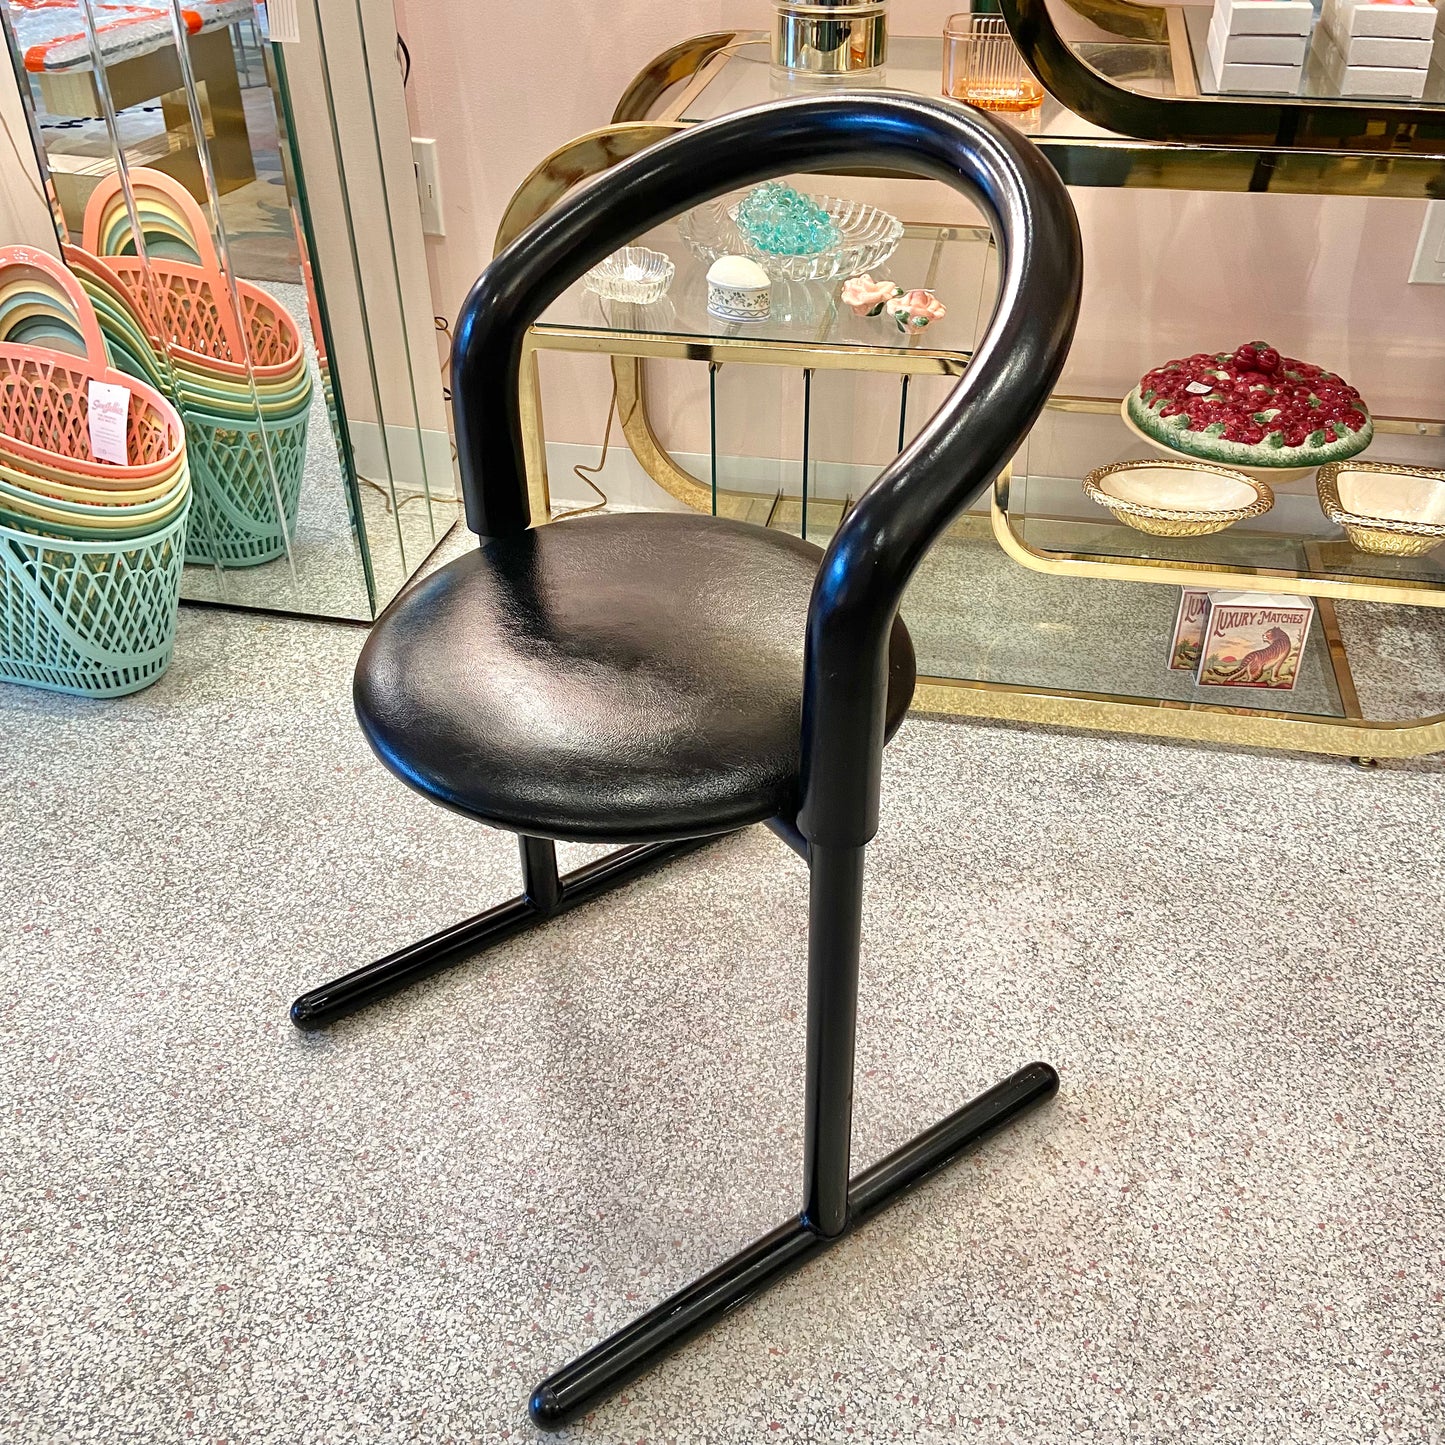 Vintage Black Postmodern Tubular Chair by Amisco